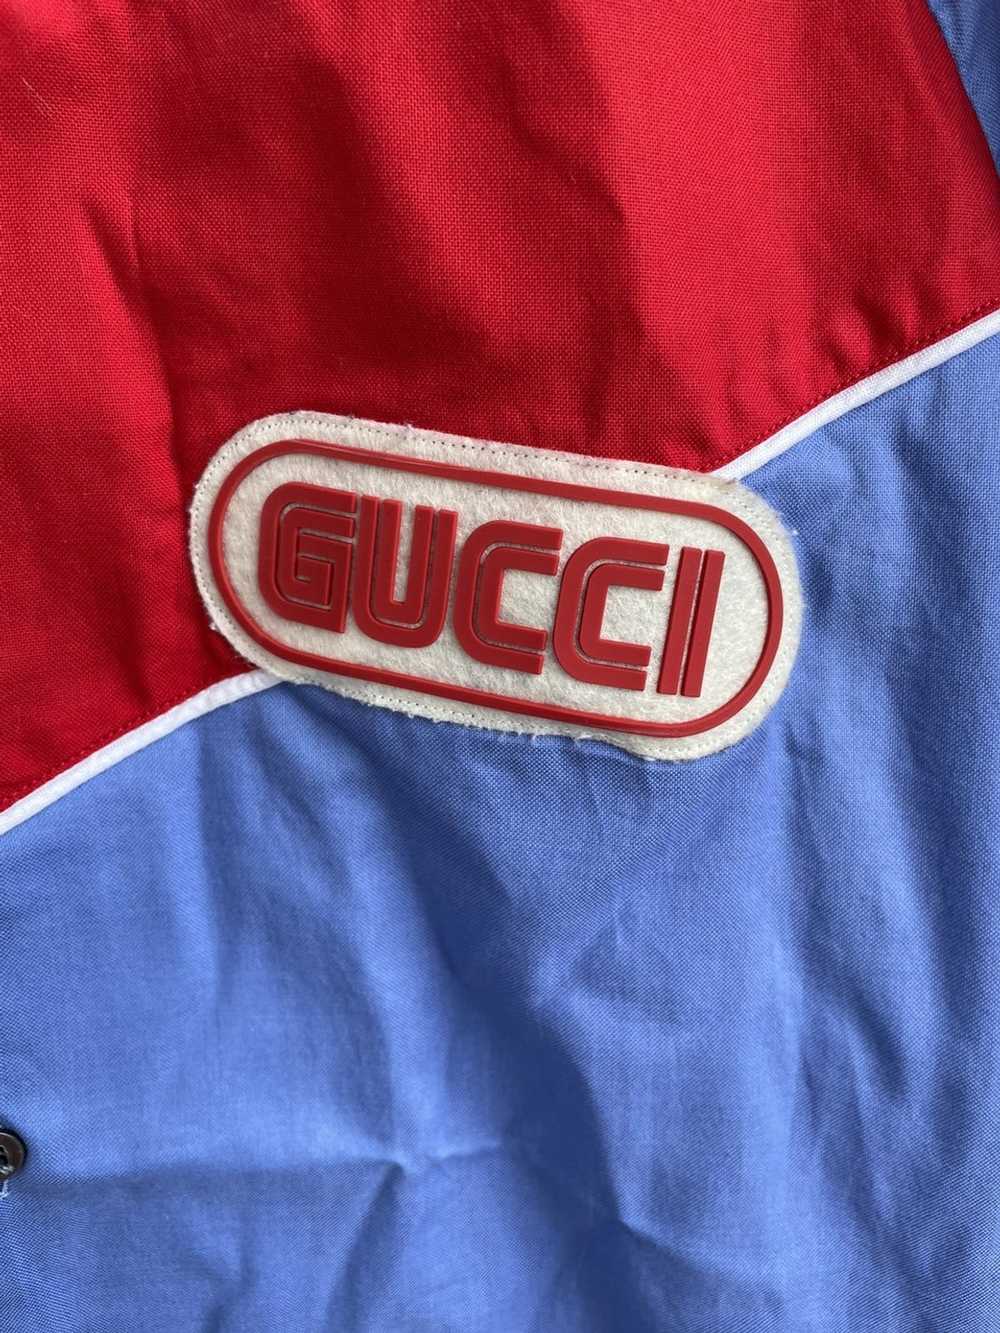 Gucci Gucci Embroidery Bowling Shirt - image 5